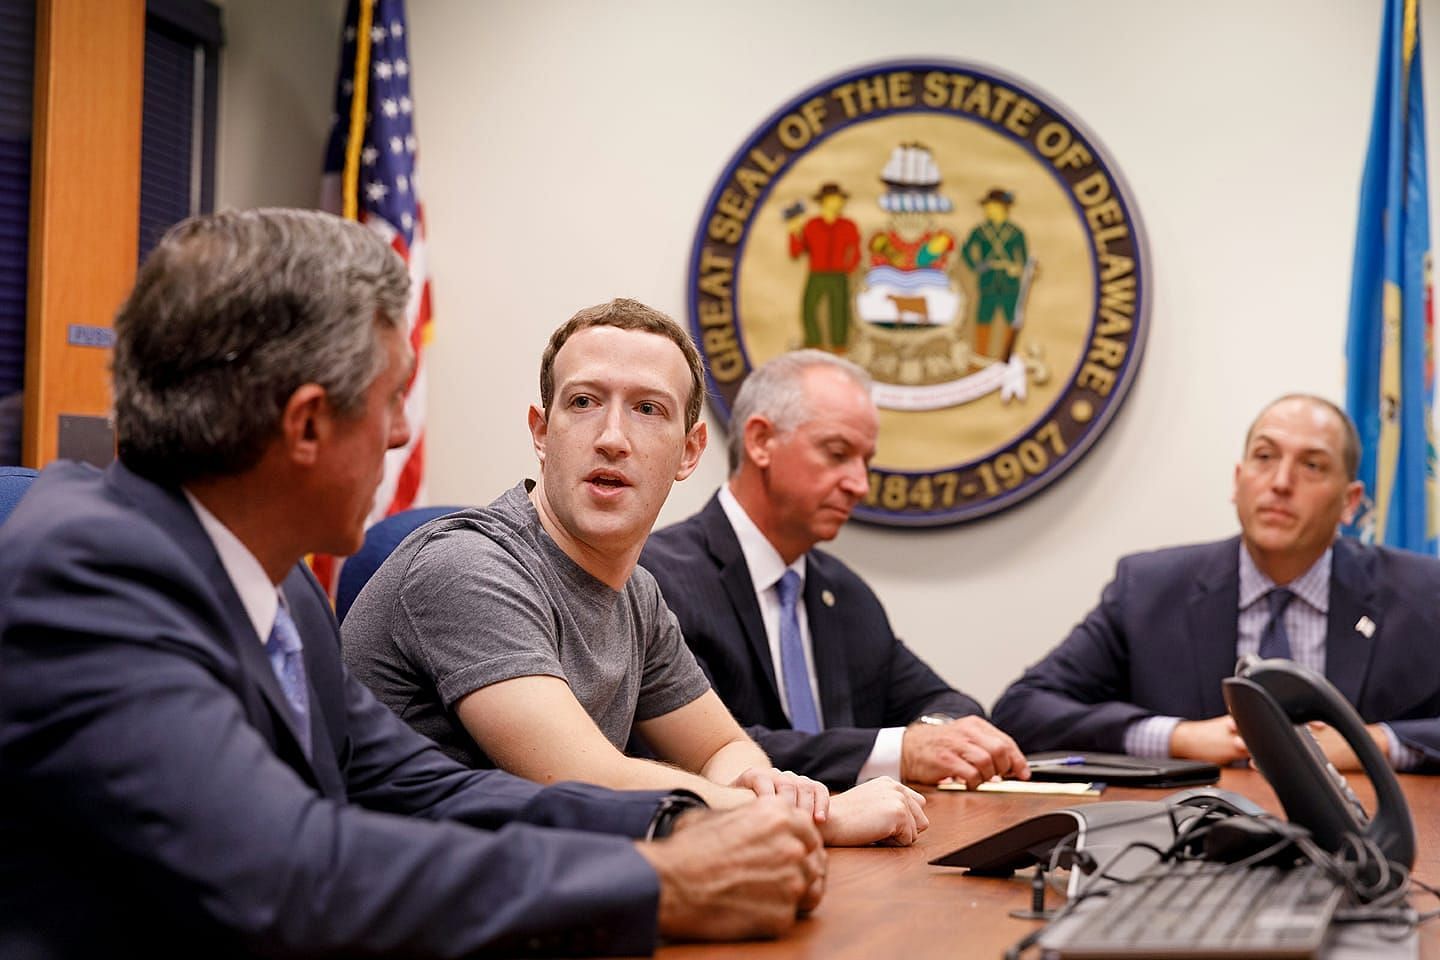 How much money does Mark Zuckerberg make from Facebook (Meta)?